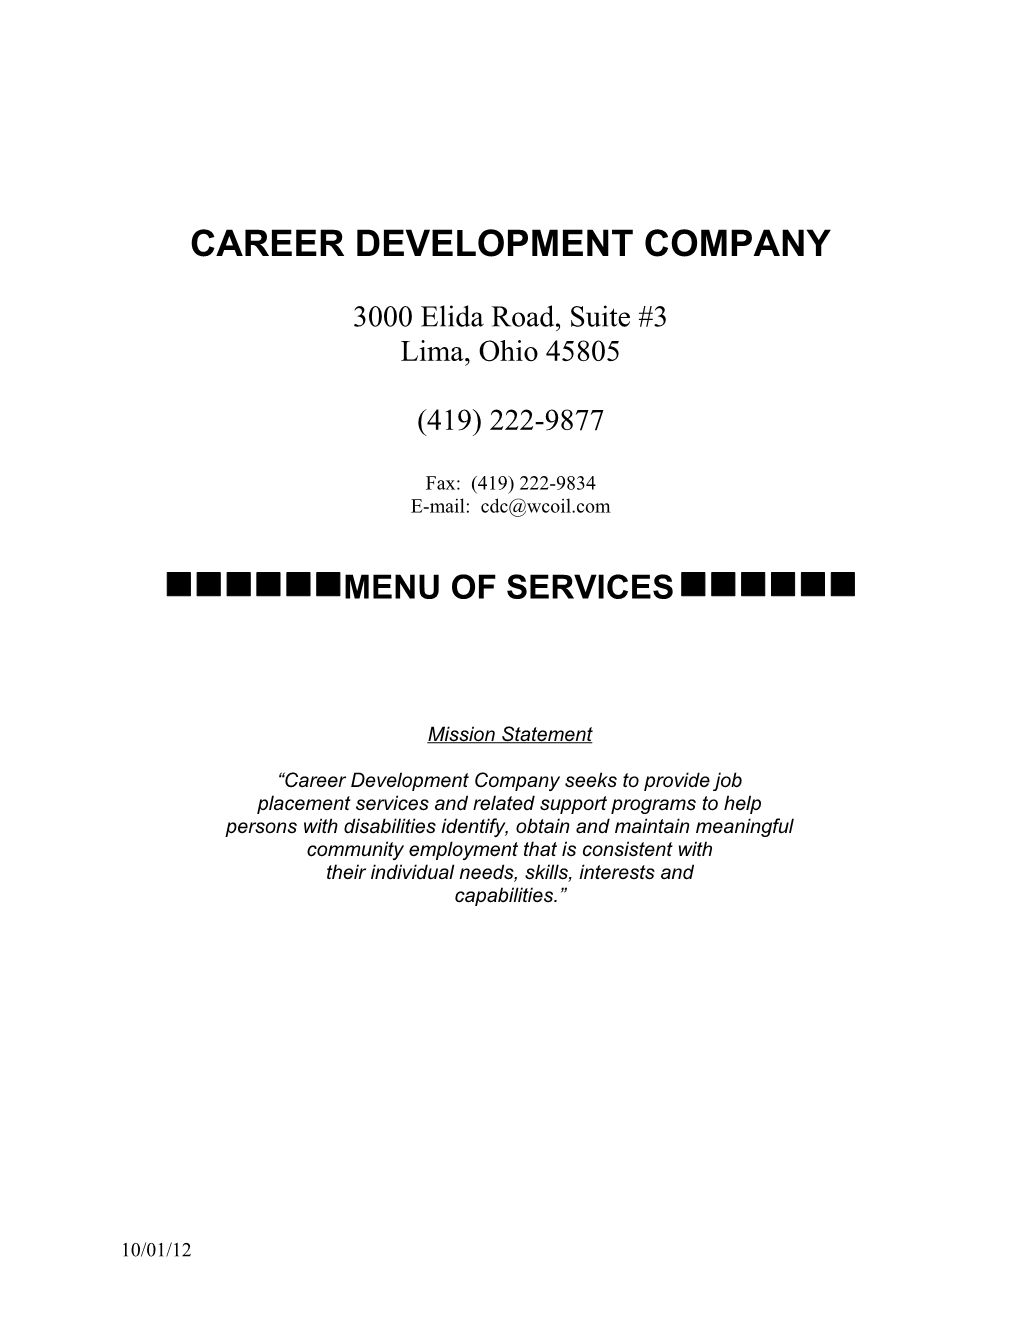 Career Development Company